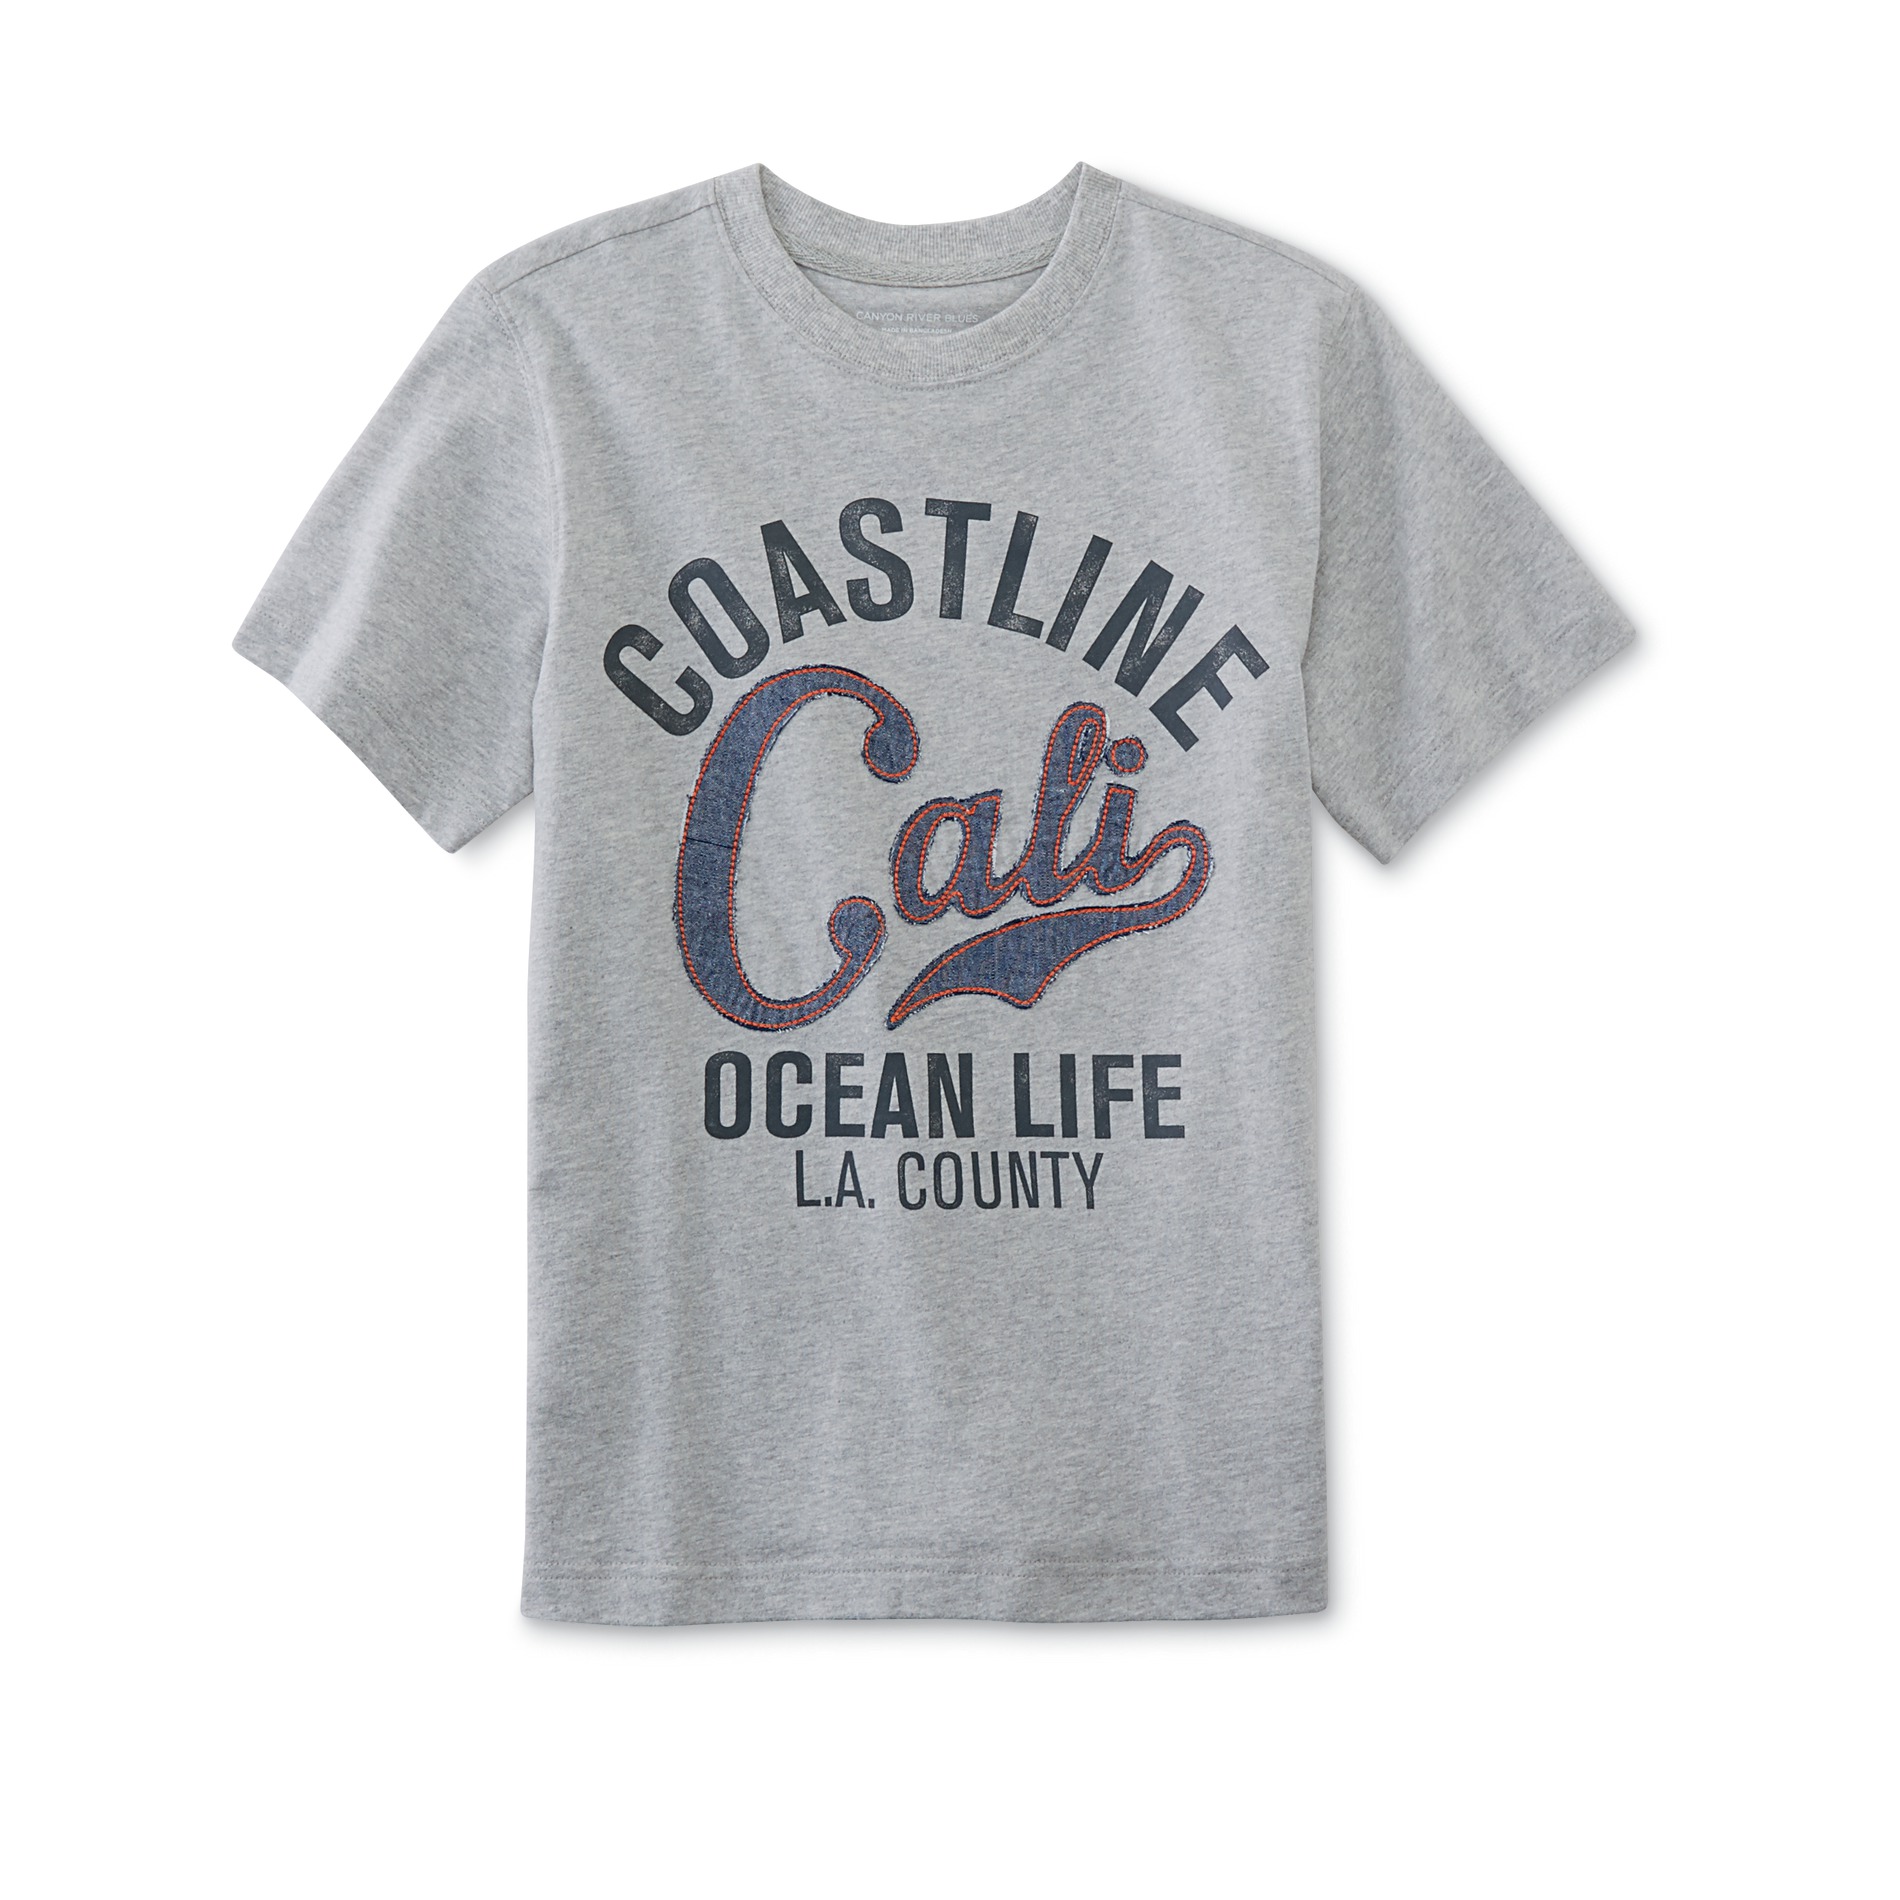 Boy's Graphic T-Shirt - Coastline Cali